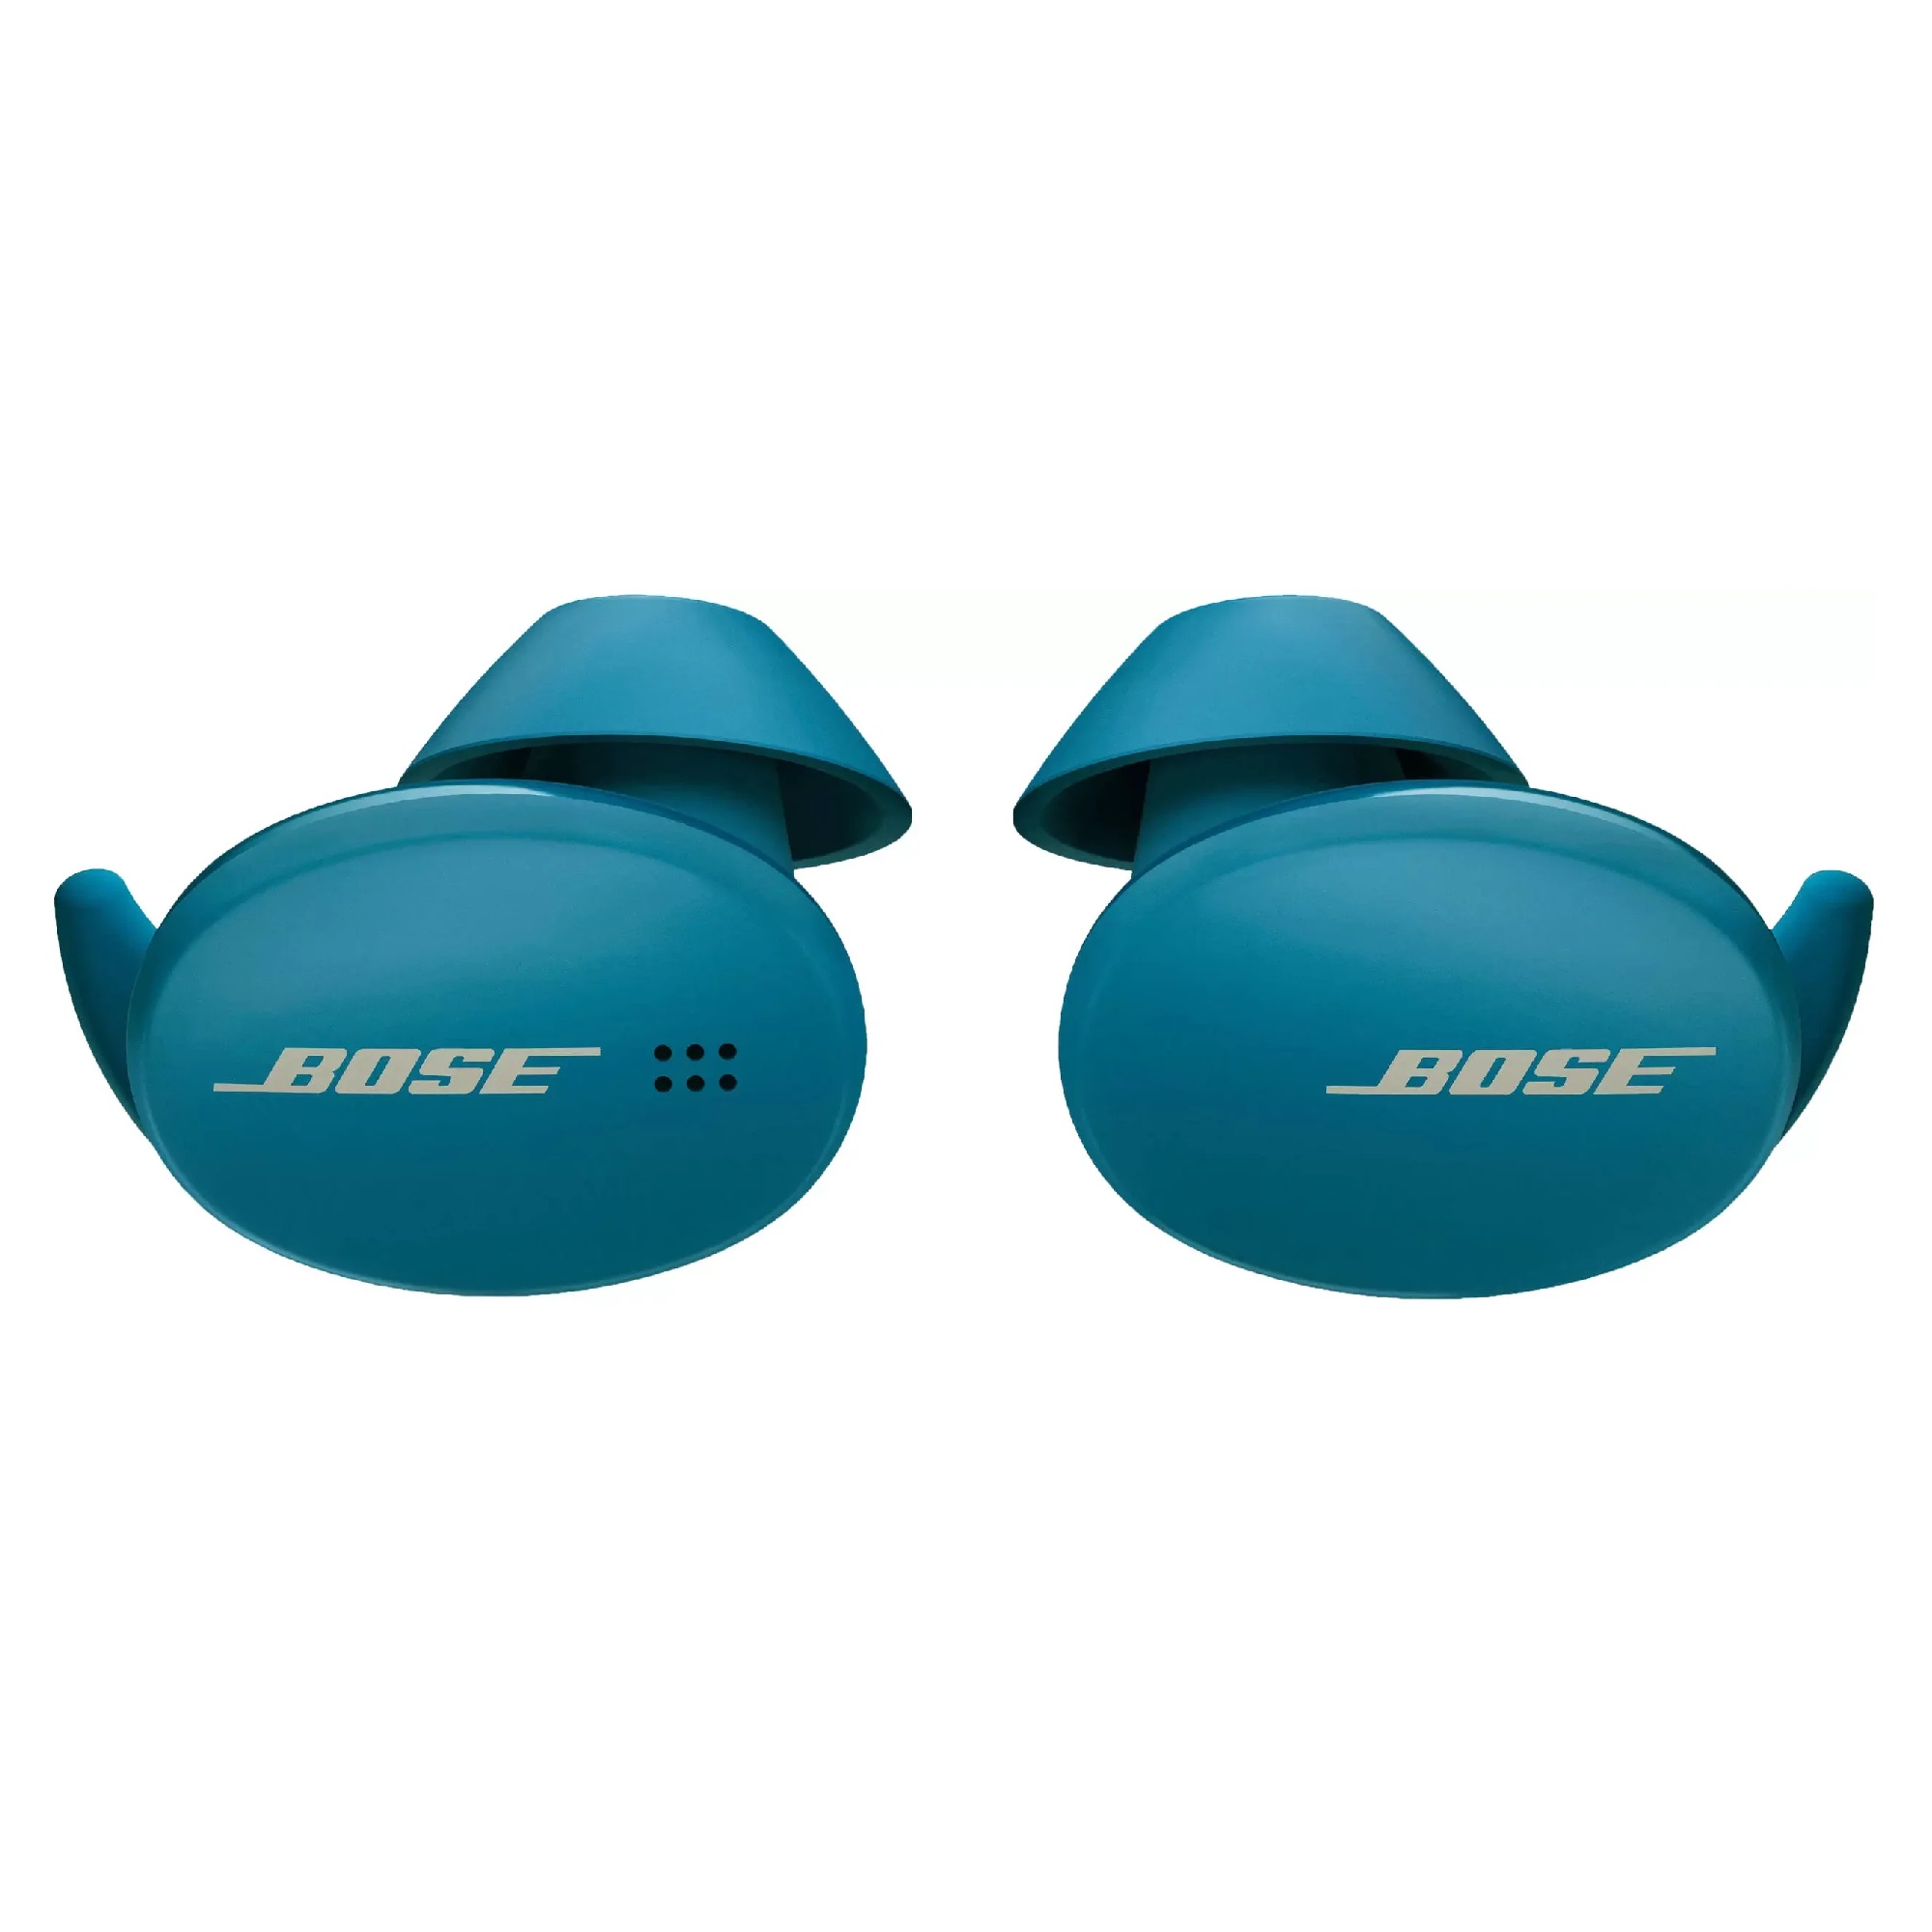 Bose sport earbuds. Bose Sport Earbuds Baltic Blue. Bose наушники беспроводные Sport. Беспроводные наушники Bose Sport Earbuds Blue.